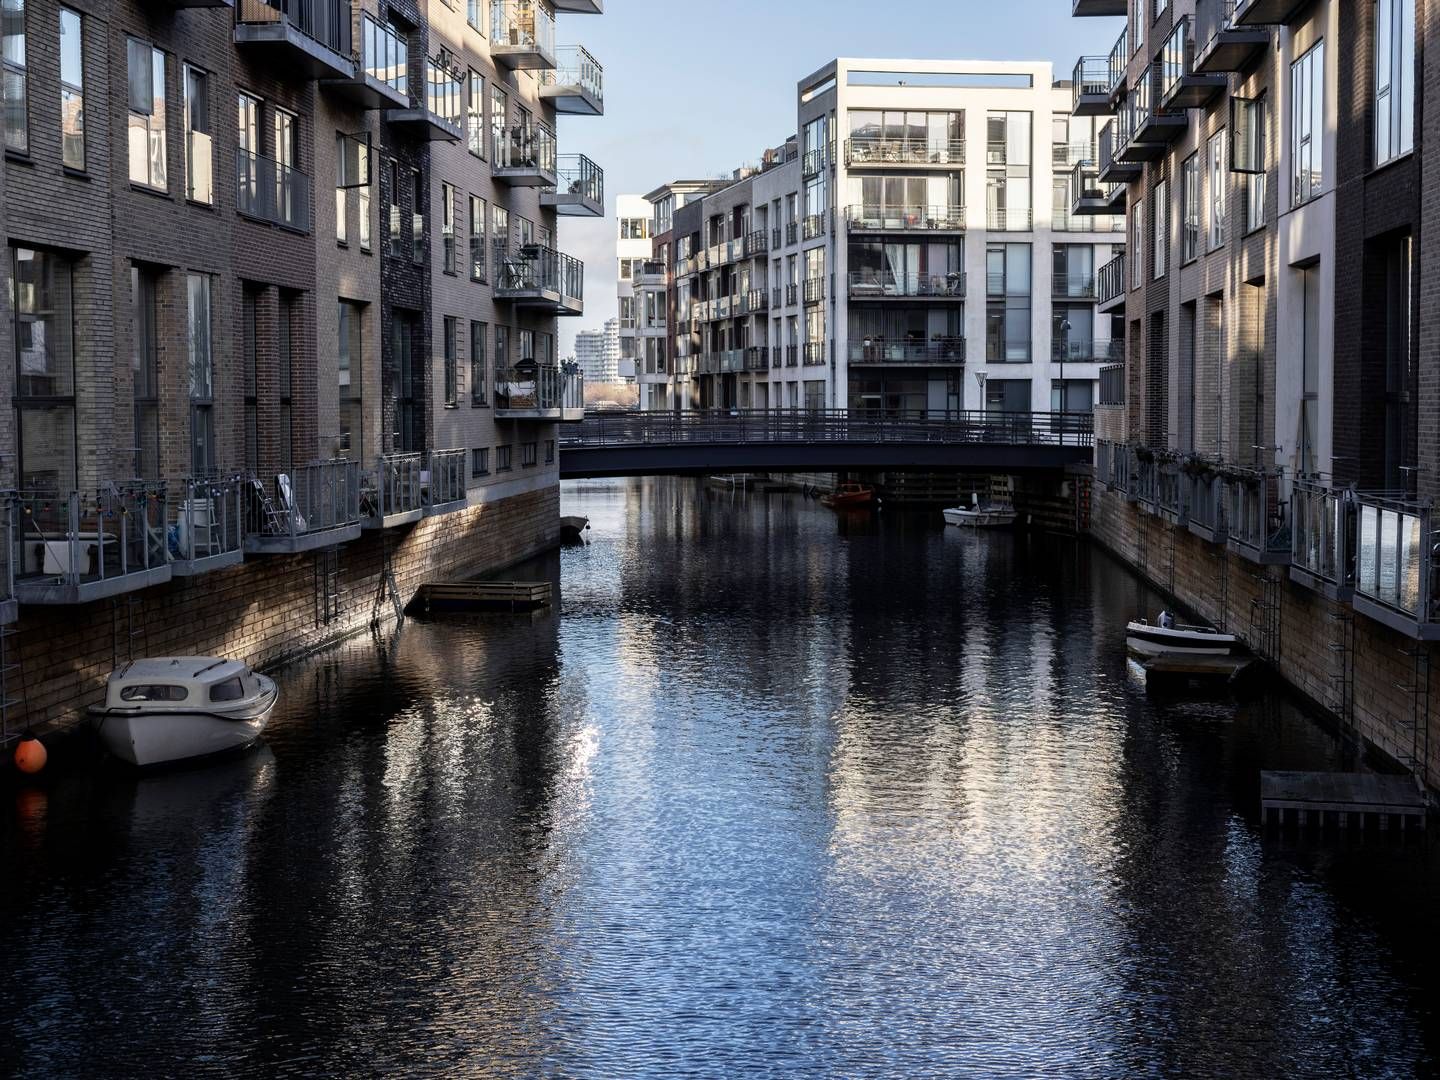 Sluseholmen is Copenhagen’s new canal community. | Photo: Mads Nissen/Ritzau Scanpix